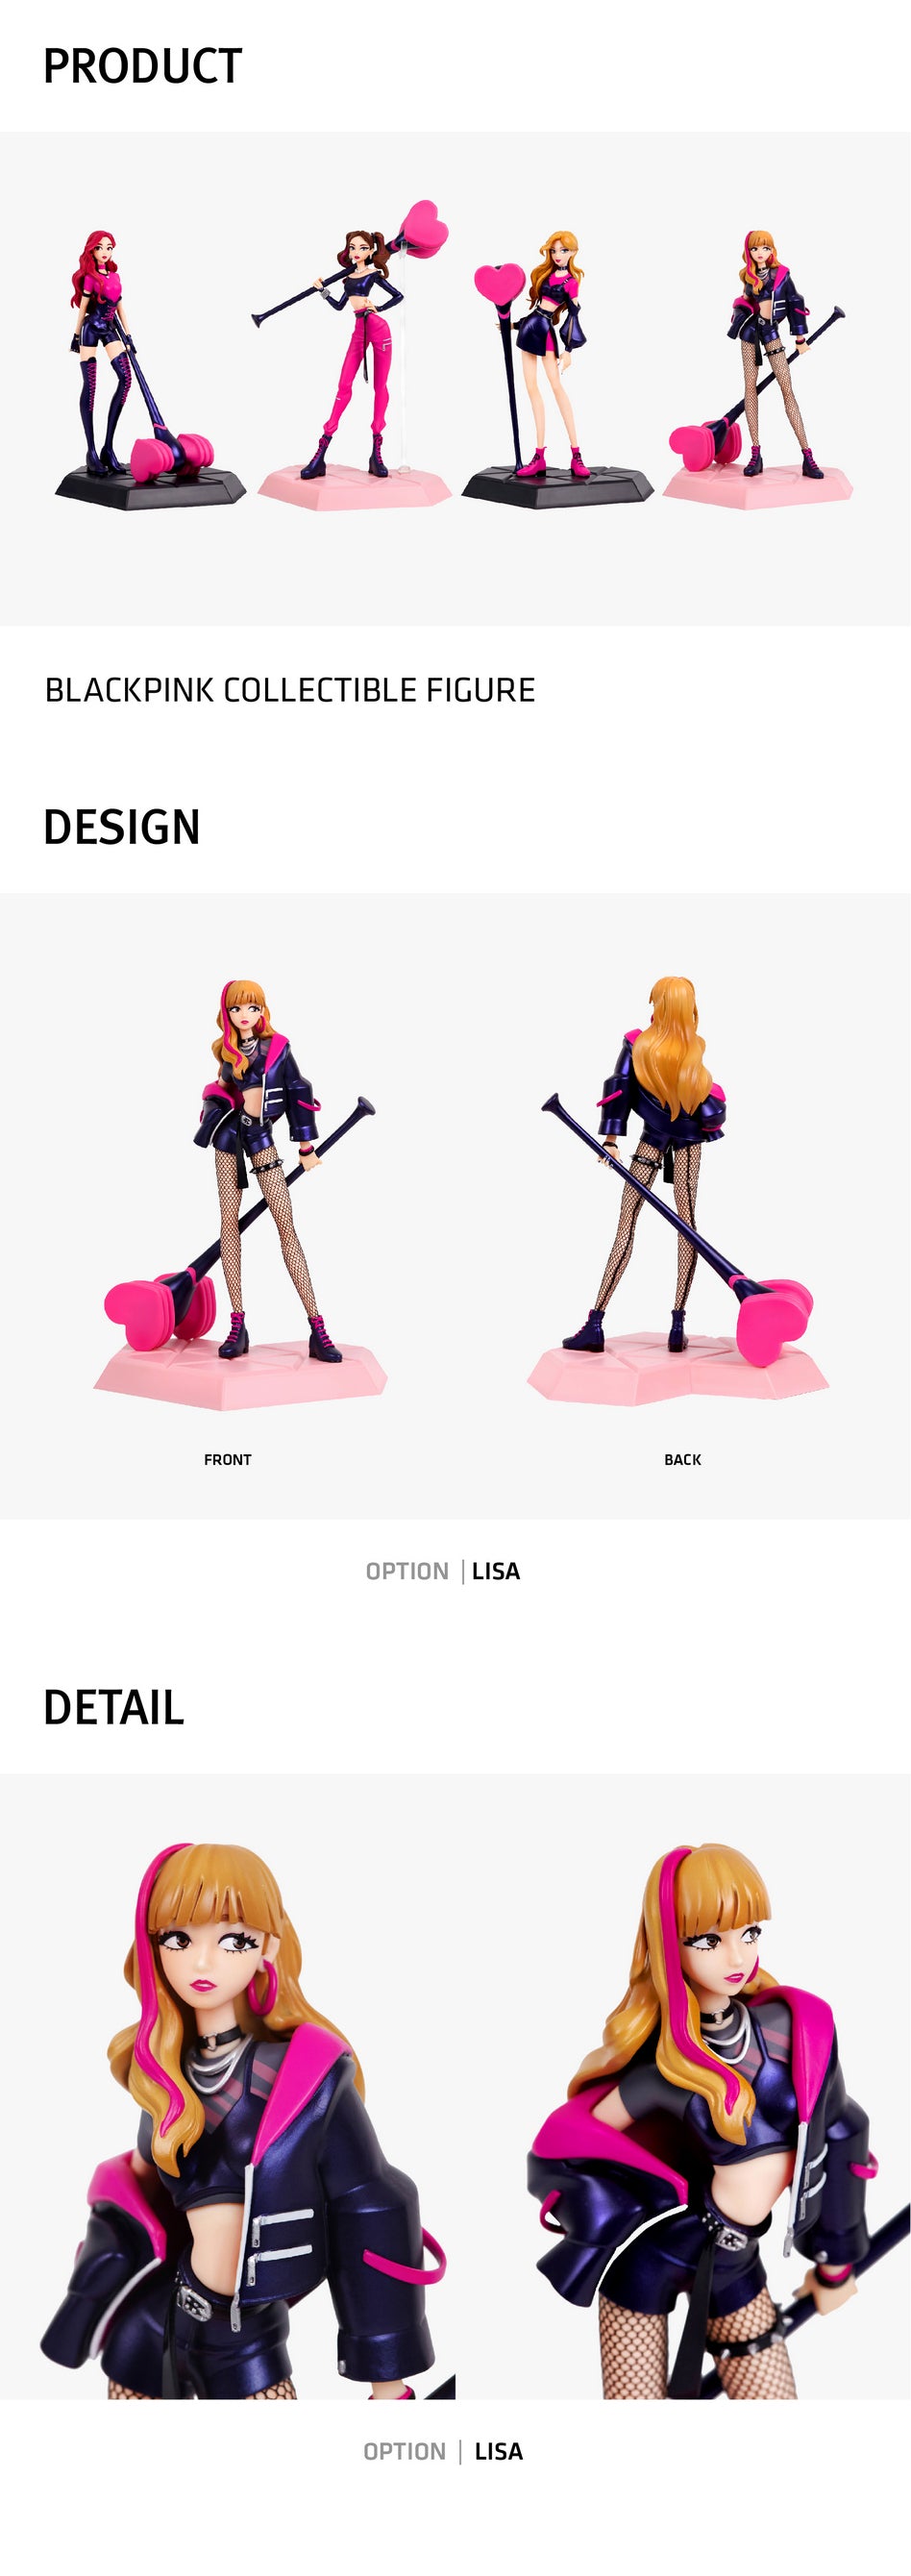 BLACKPINK Figure Lisa Product Details